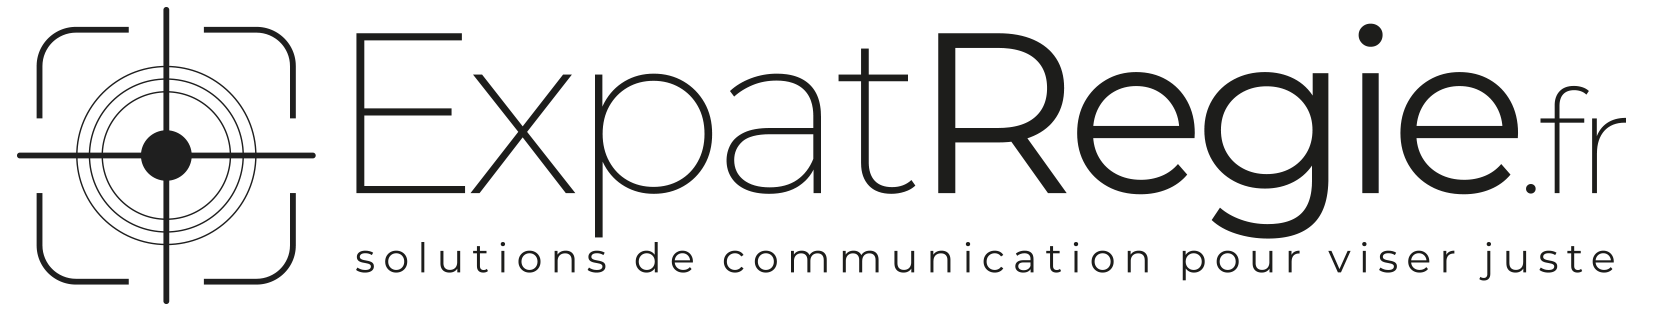 ExpatRegie-logo-fond-blanc.png (68 KB)